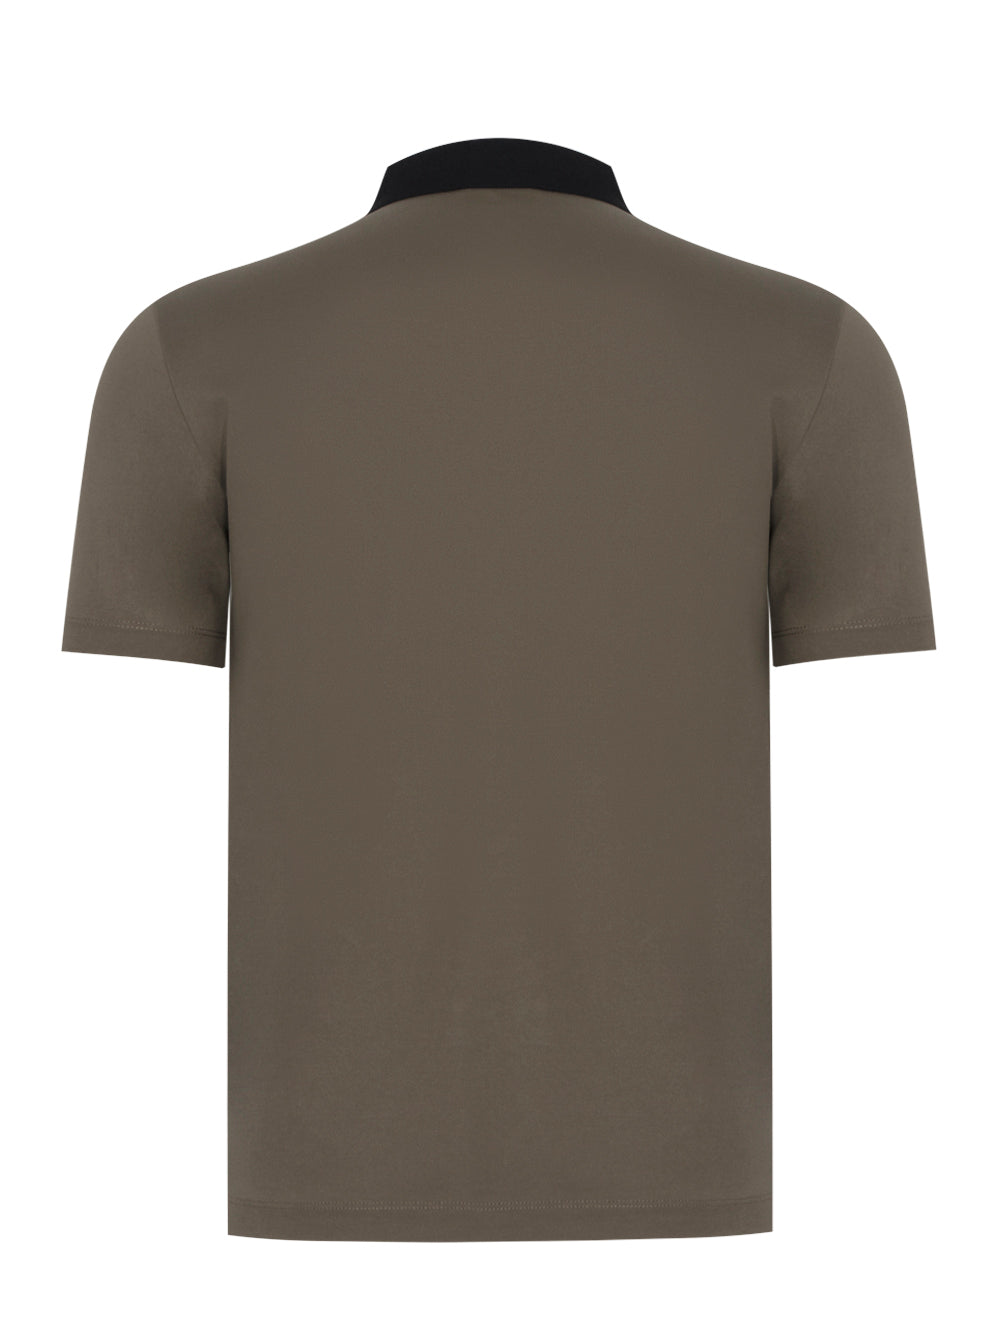 Pique Short Sleeves Polo Tee (Military)